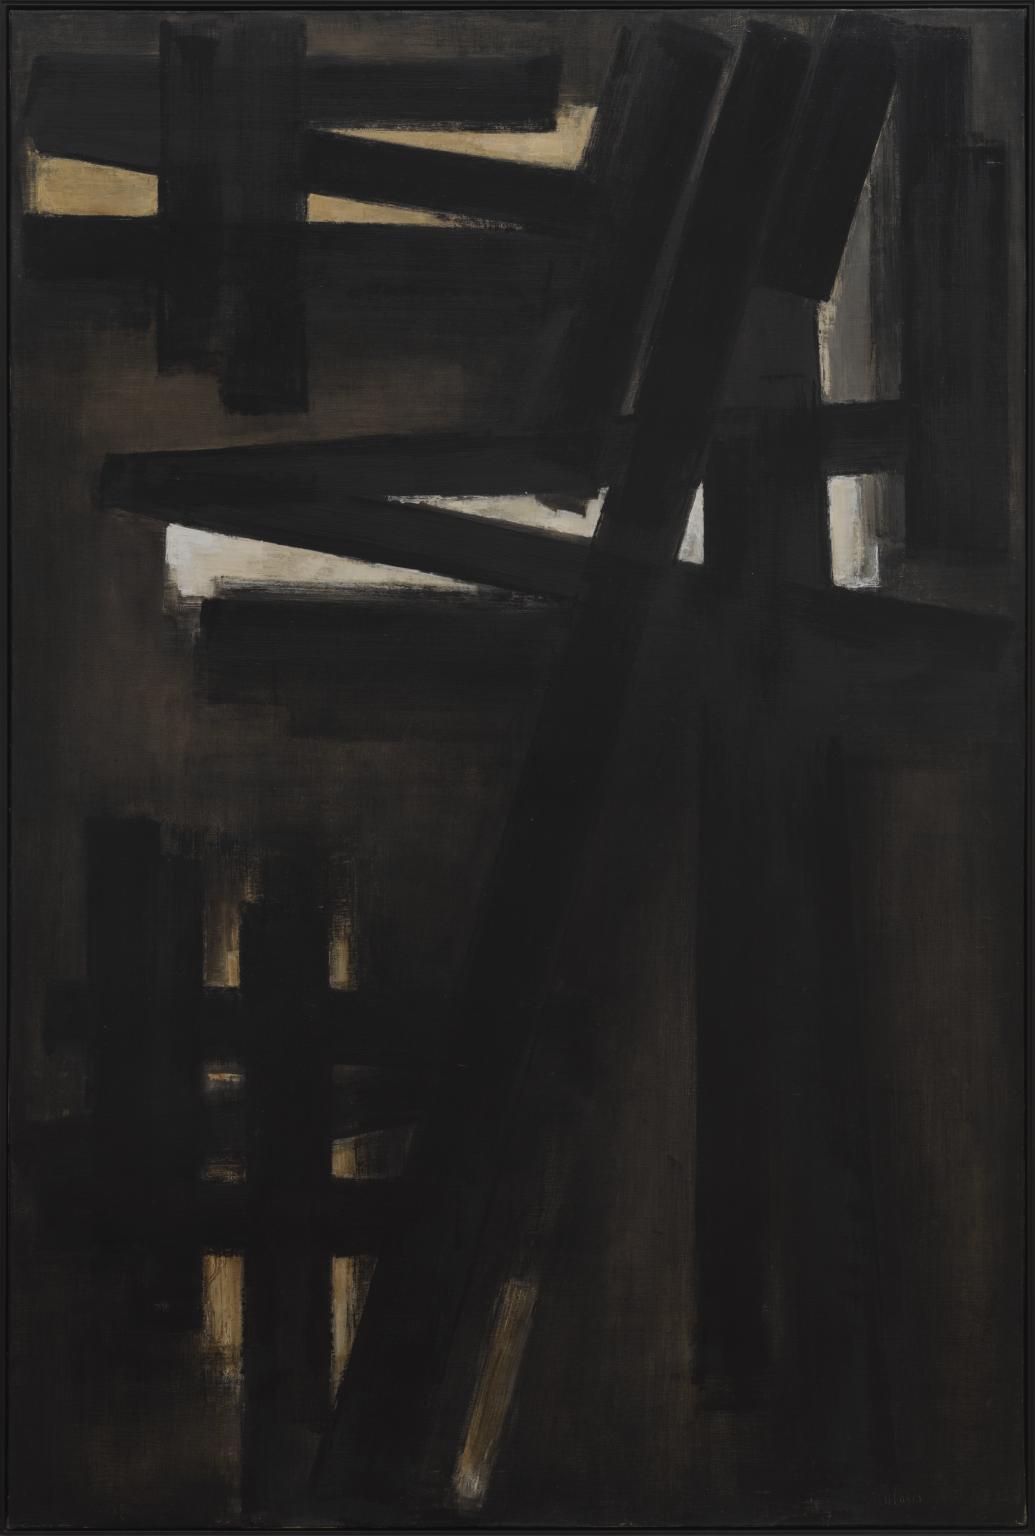 N06199: Painting, 23 May 1953